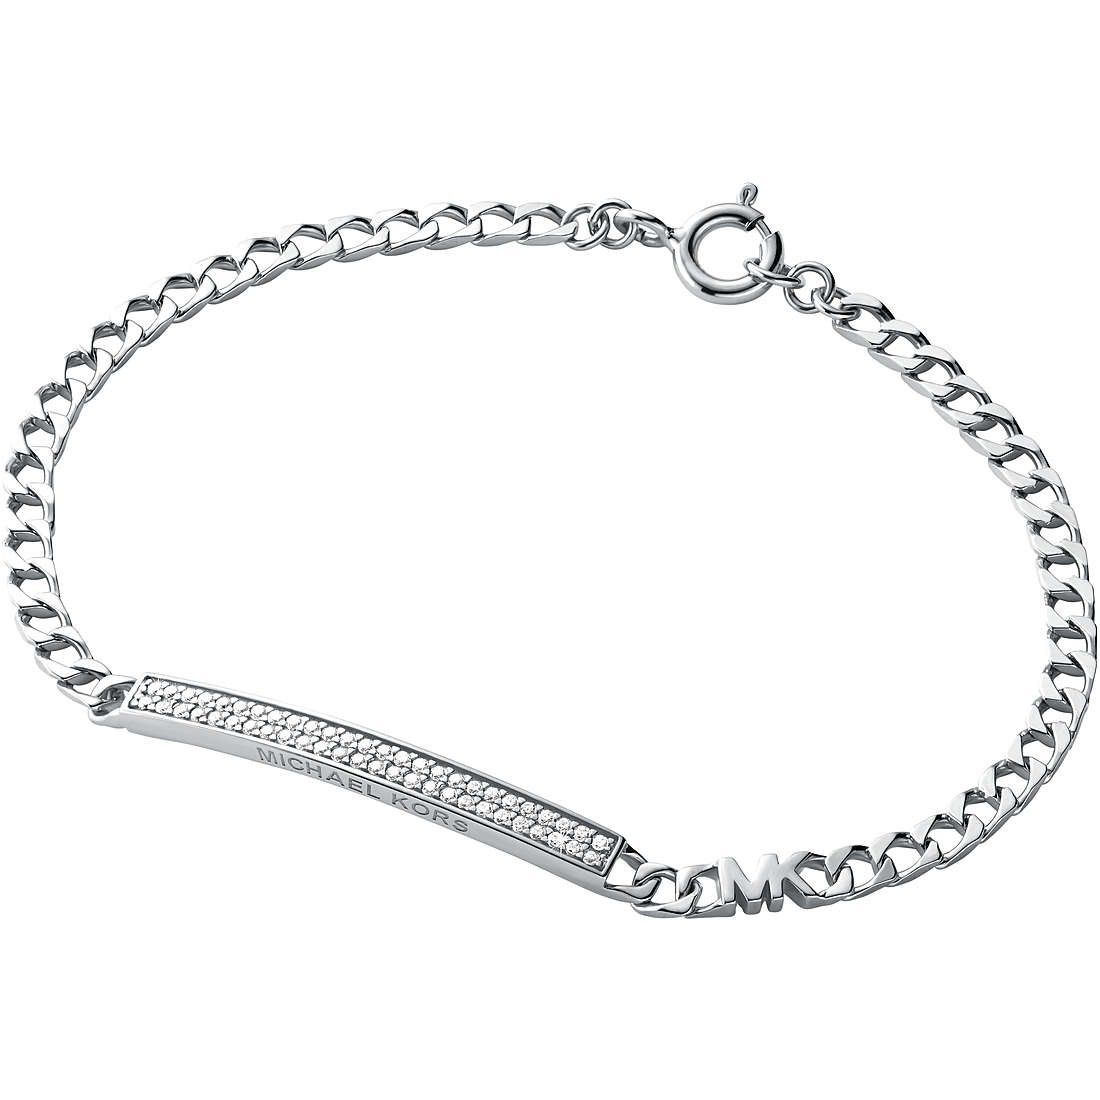 Michael Kors Premium bracelet woman Bracelet with 925 Silver Chain jewel MKC1379AN040